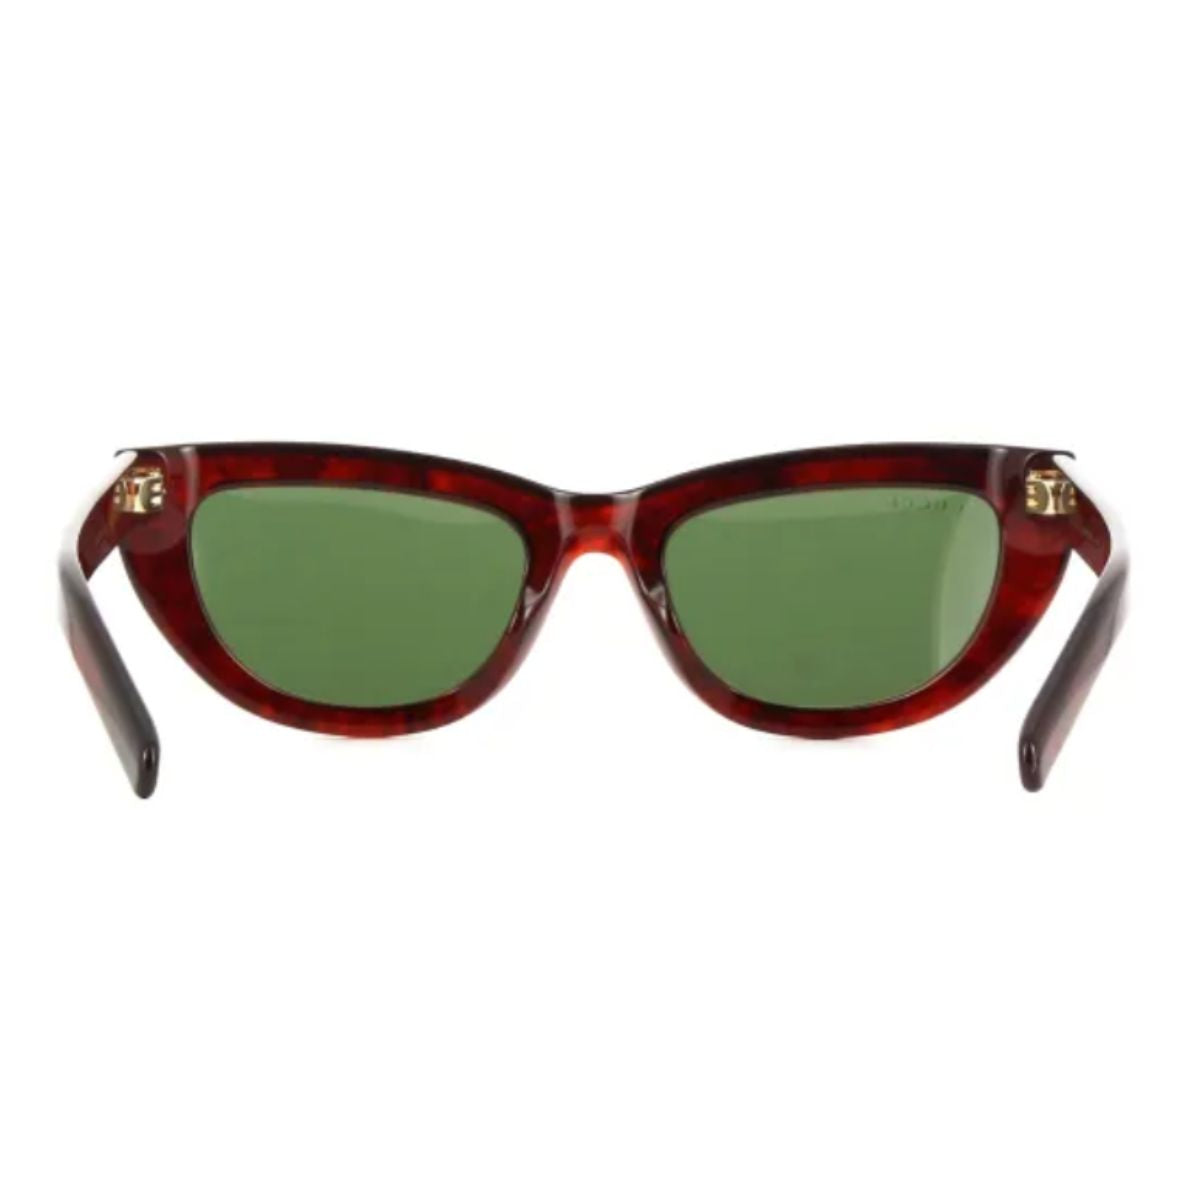 "Stylish & Trendy Gucci Cat-Eye Sunglasses For Women's | Optorium"